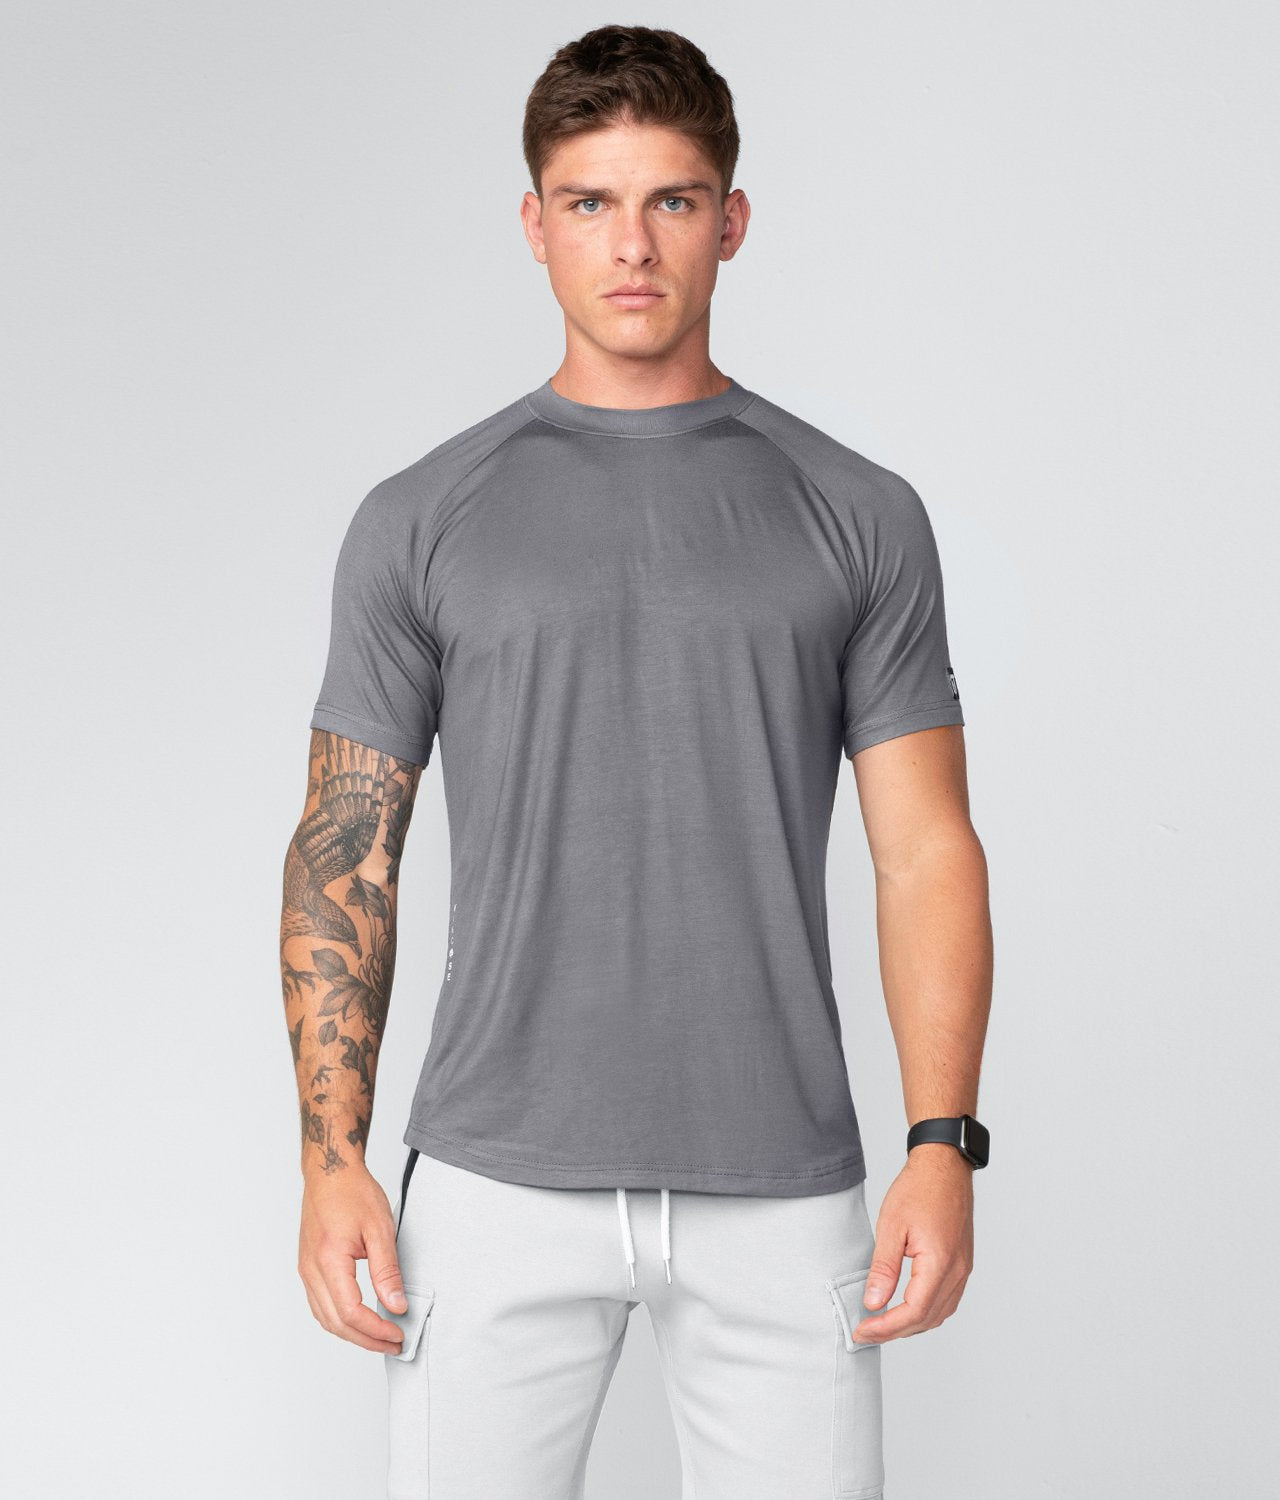 Born Tough Core Fit Short Sleeve Gray Gym Workout Shirt For Men - Elite  Sports – Elite Sports